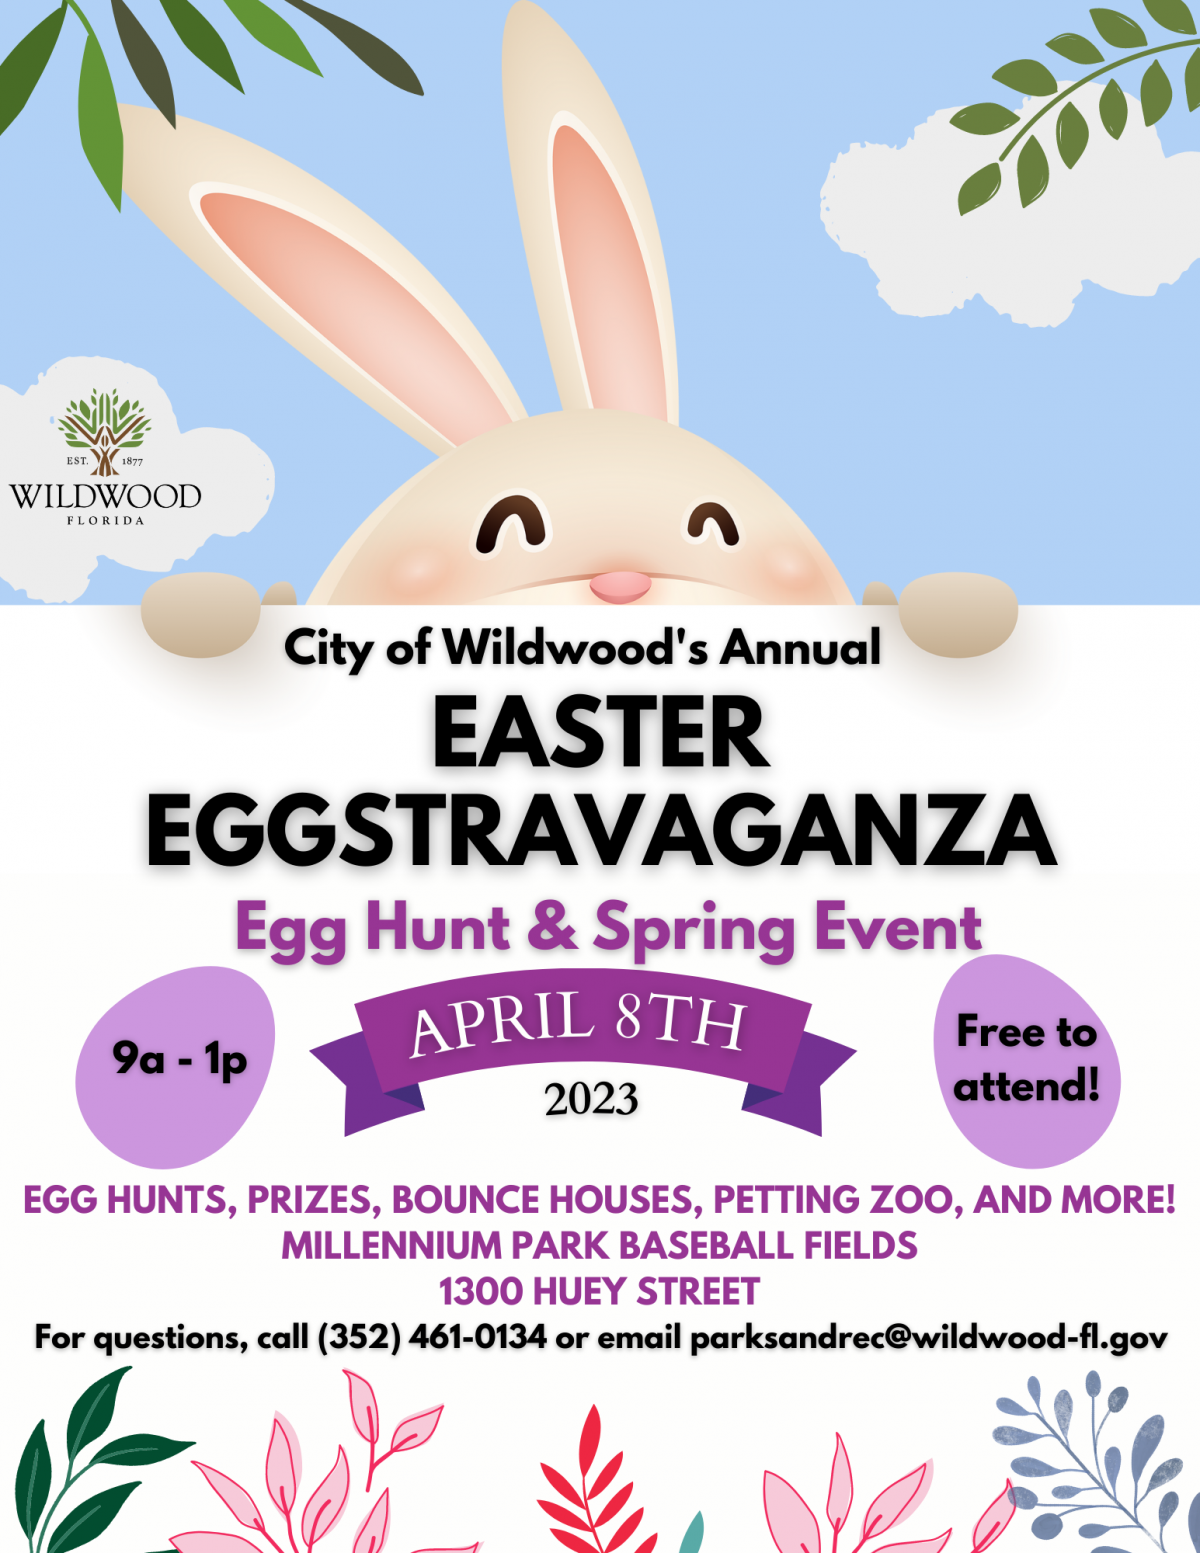 Easter Eggstravaganza - April 8th at 9am